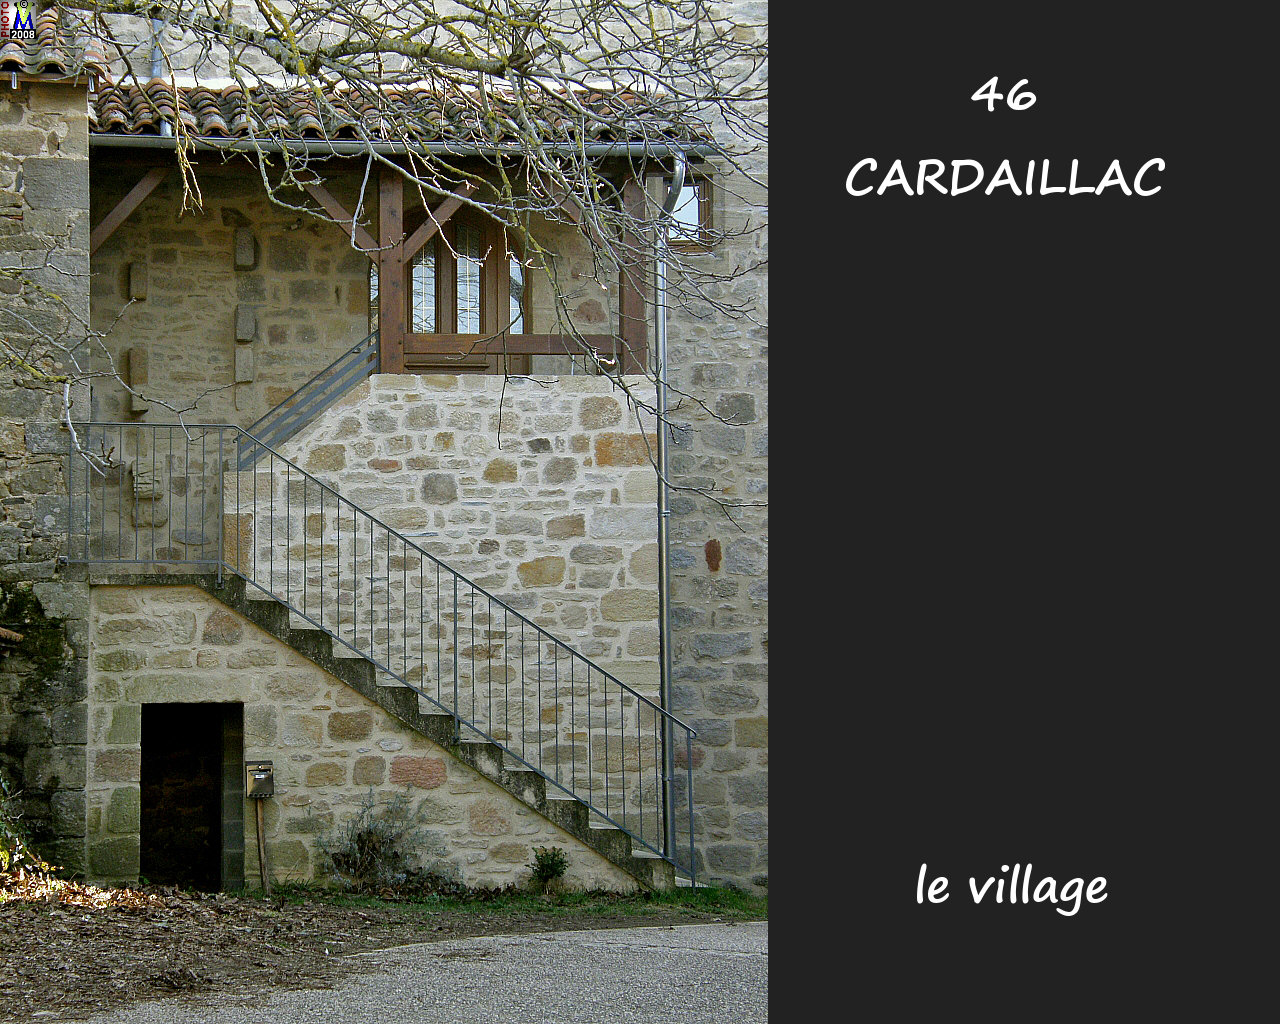 46CARDAILLAC_village_144.jpg